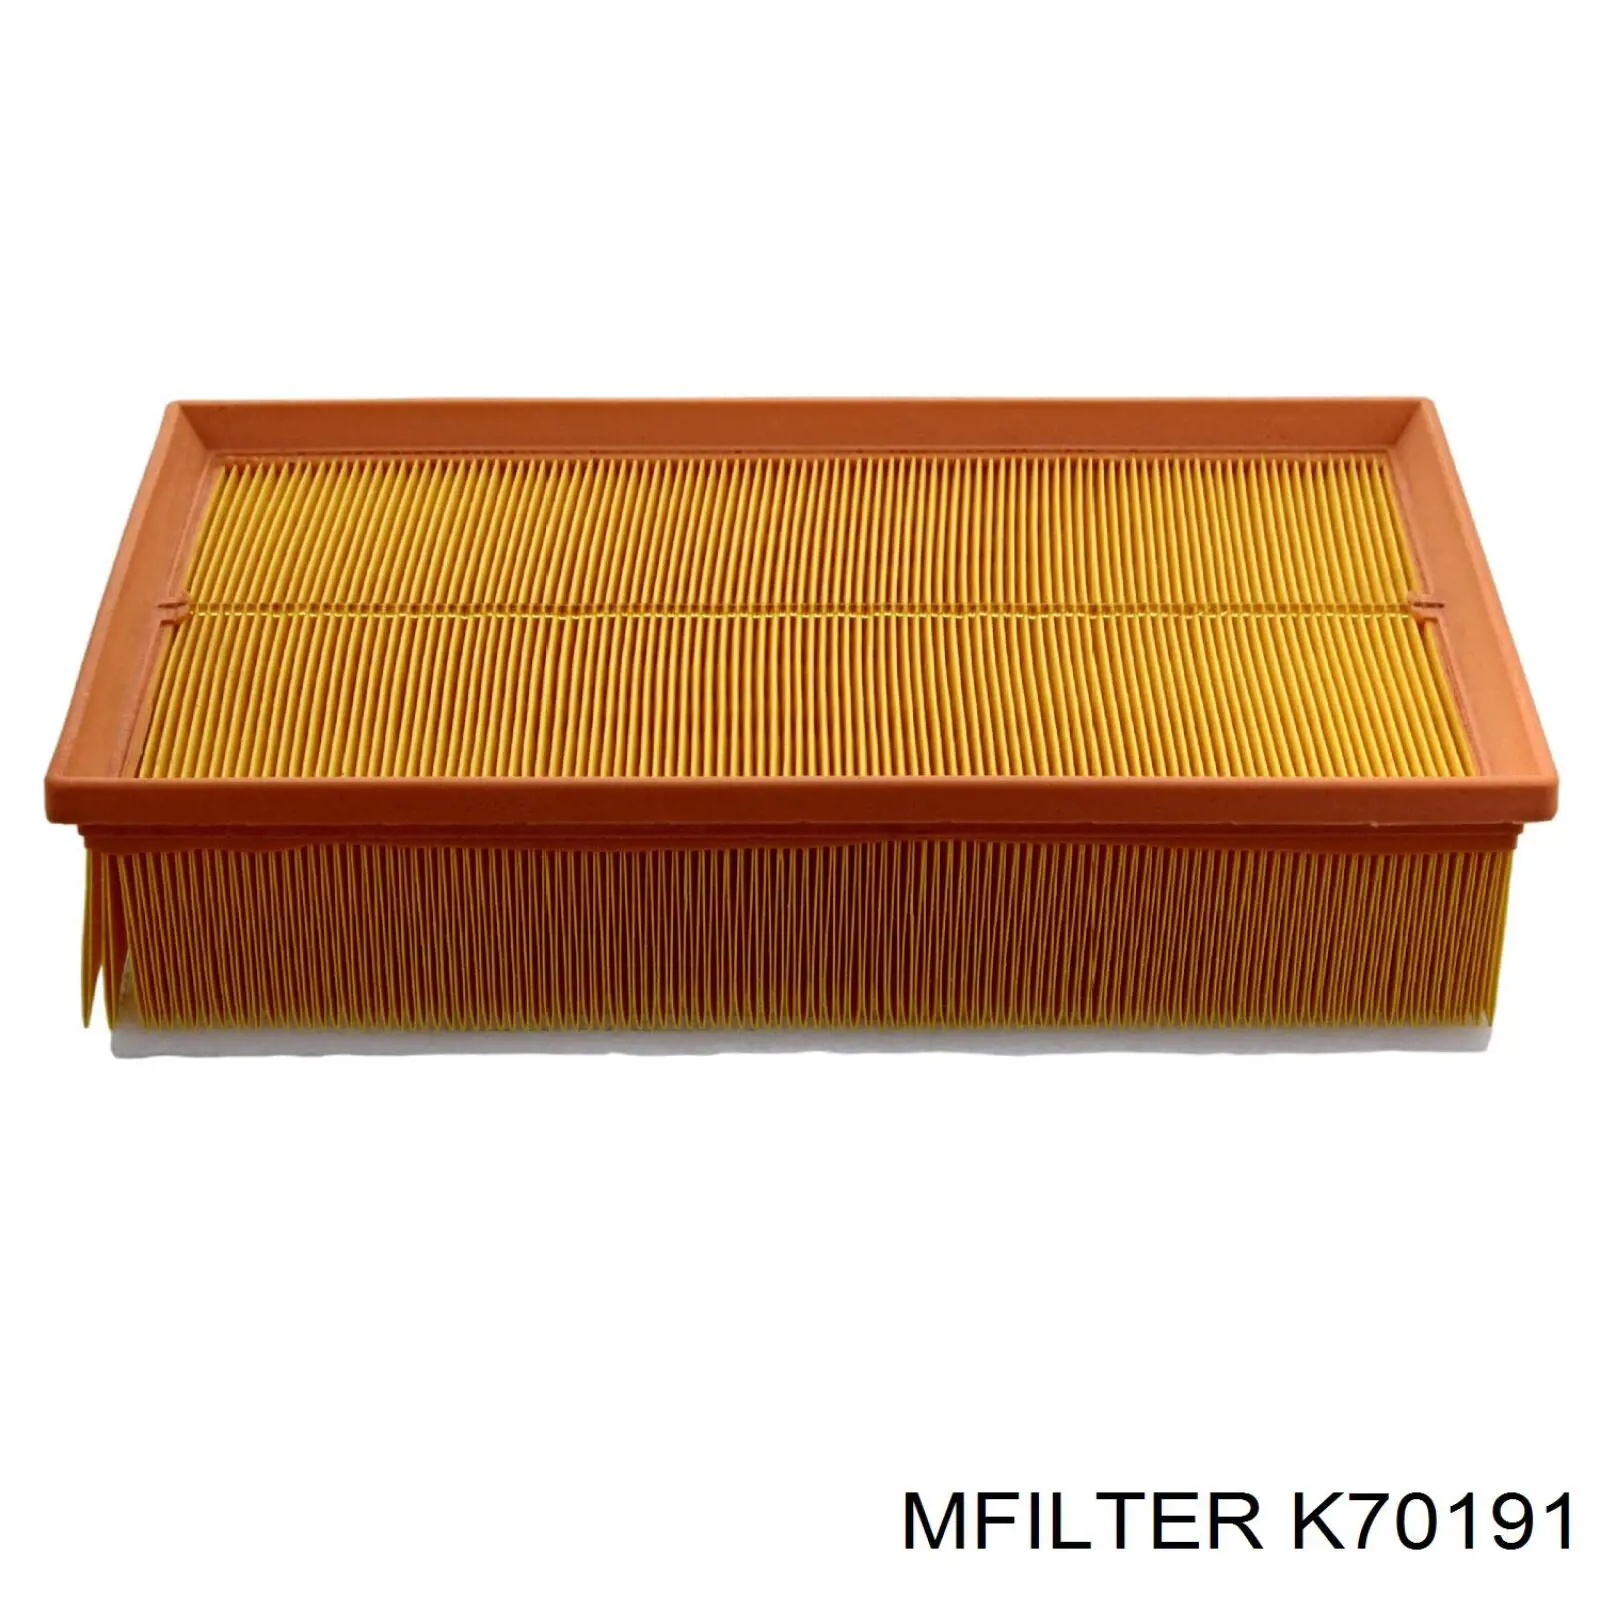 K70191 Mfilter filtro de aire